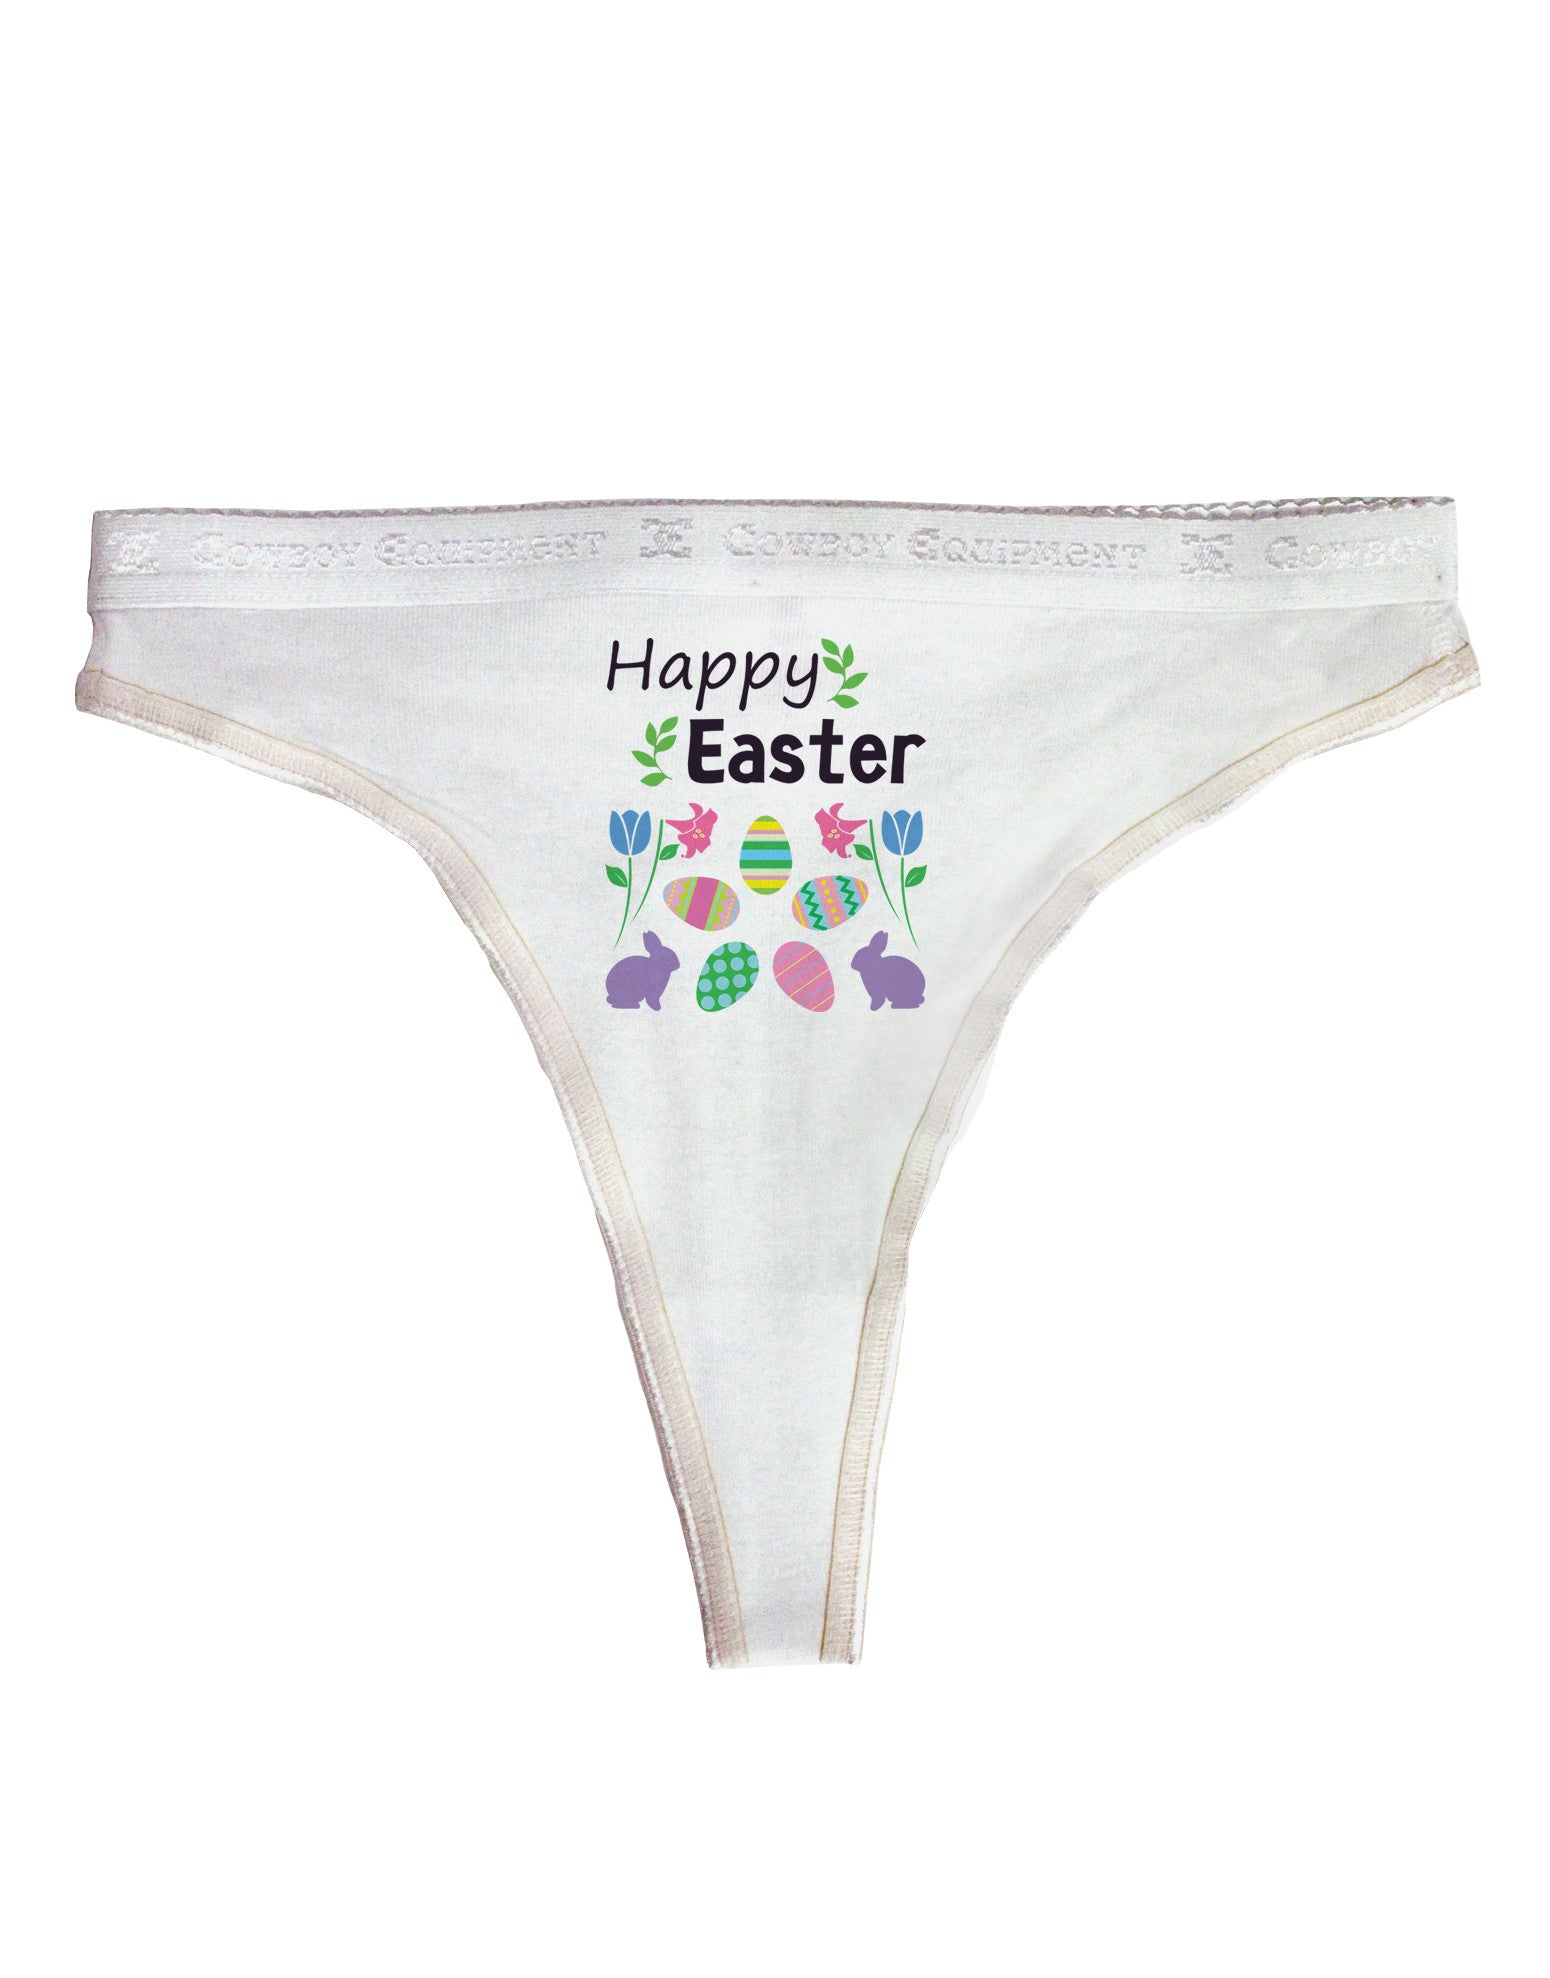 LOBBO Happy Easter Design Mens G-String Underwear